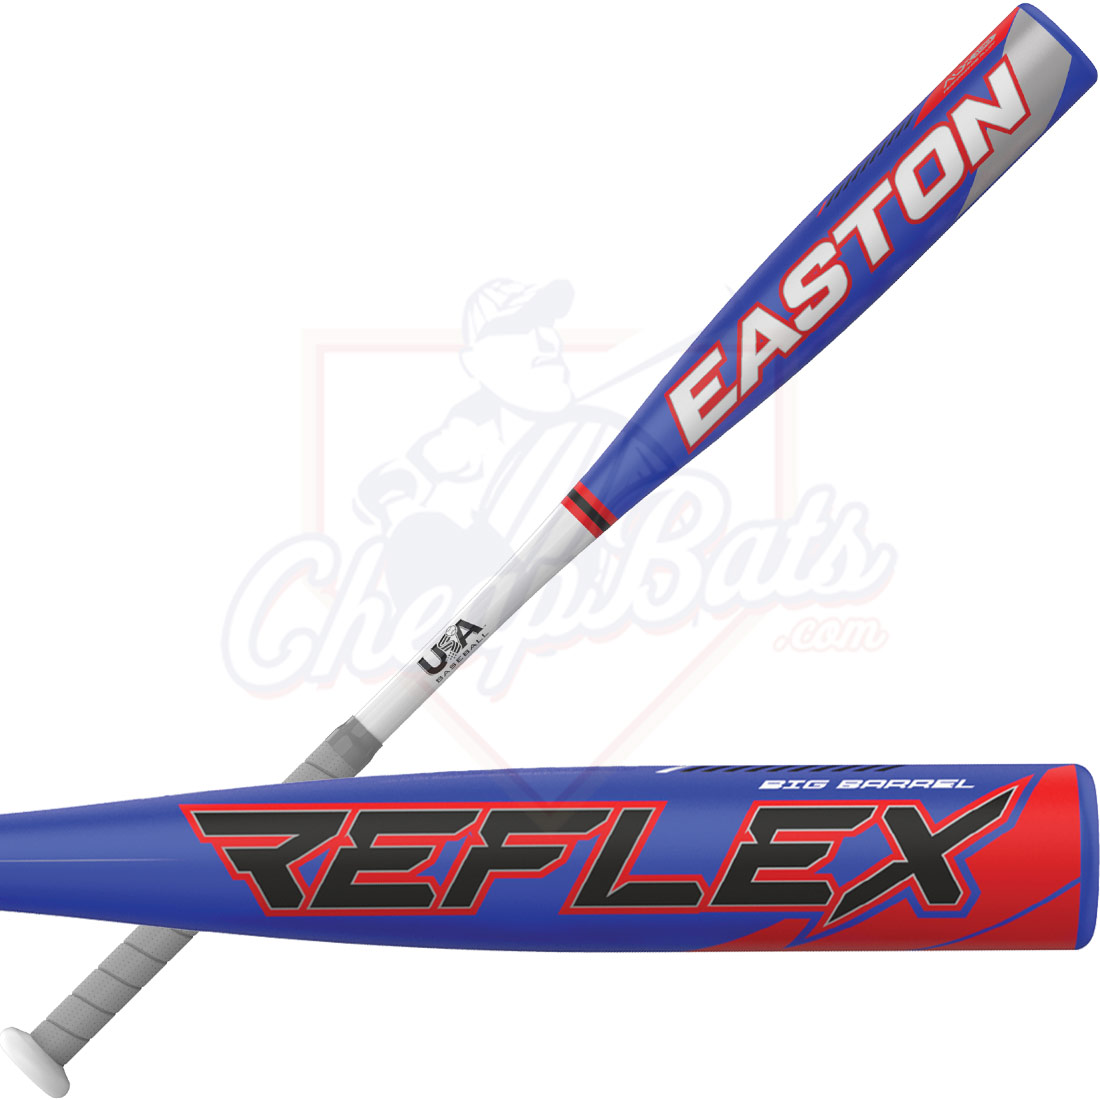 2021 Easton Reflex Youth USA Baseball Bat -12oz YBB21REF12